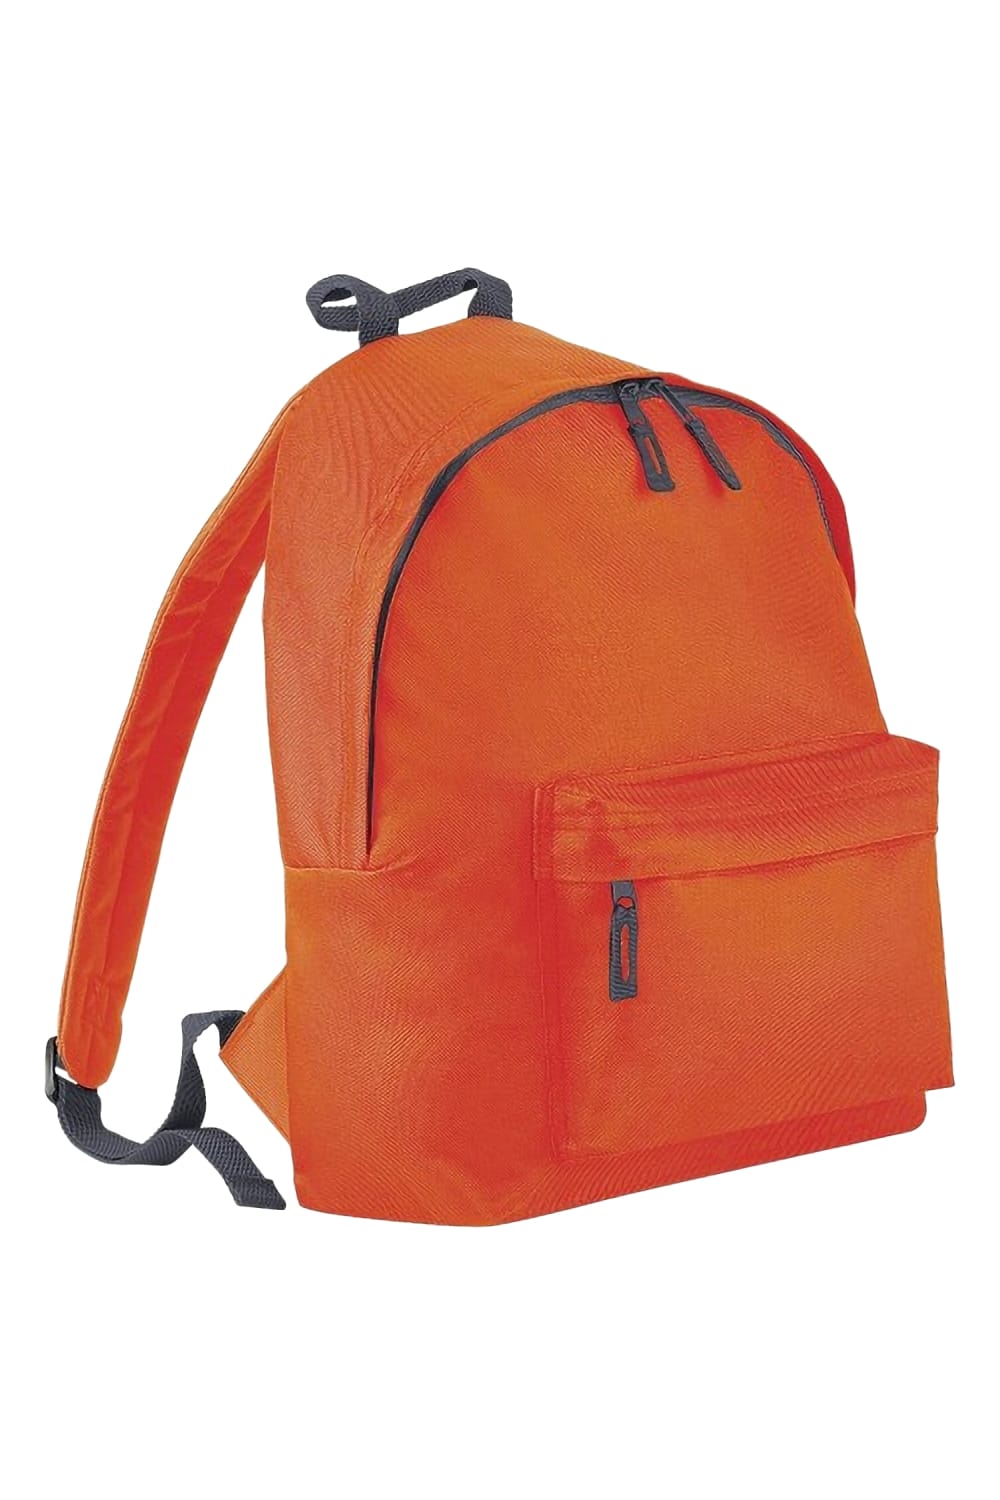 Junior Fashion Backpack / Rucksack (14 Liters) (Orange/Graphite Grey)